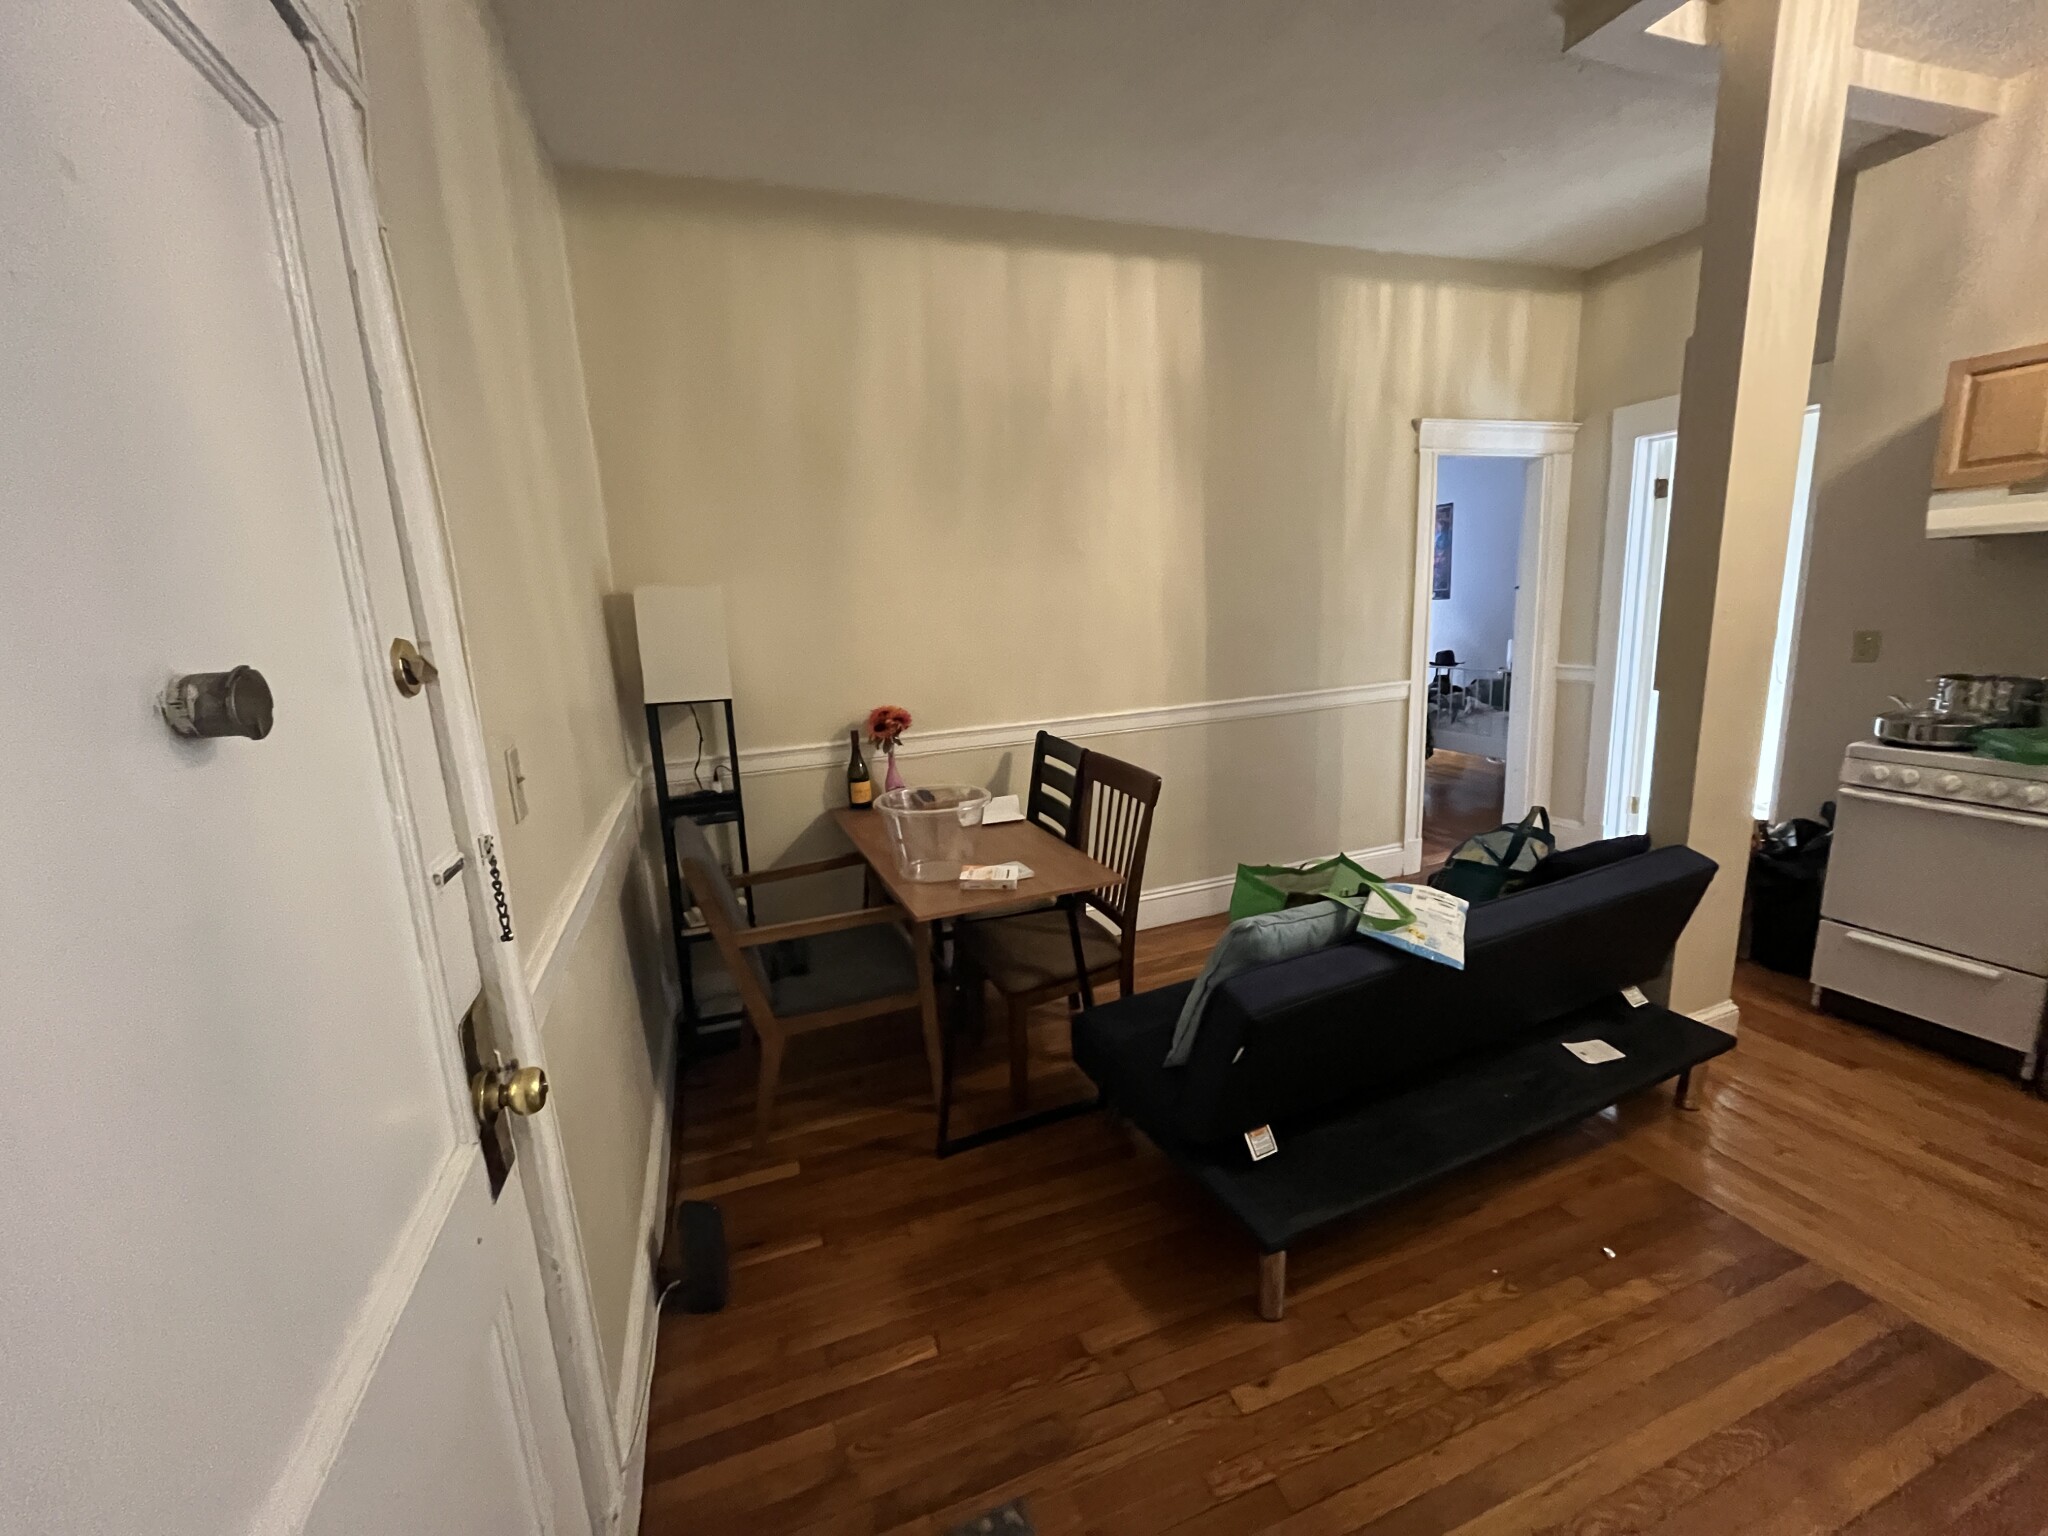 Photos of apartment on Penniman Rd.,Boston MA 02134